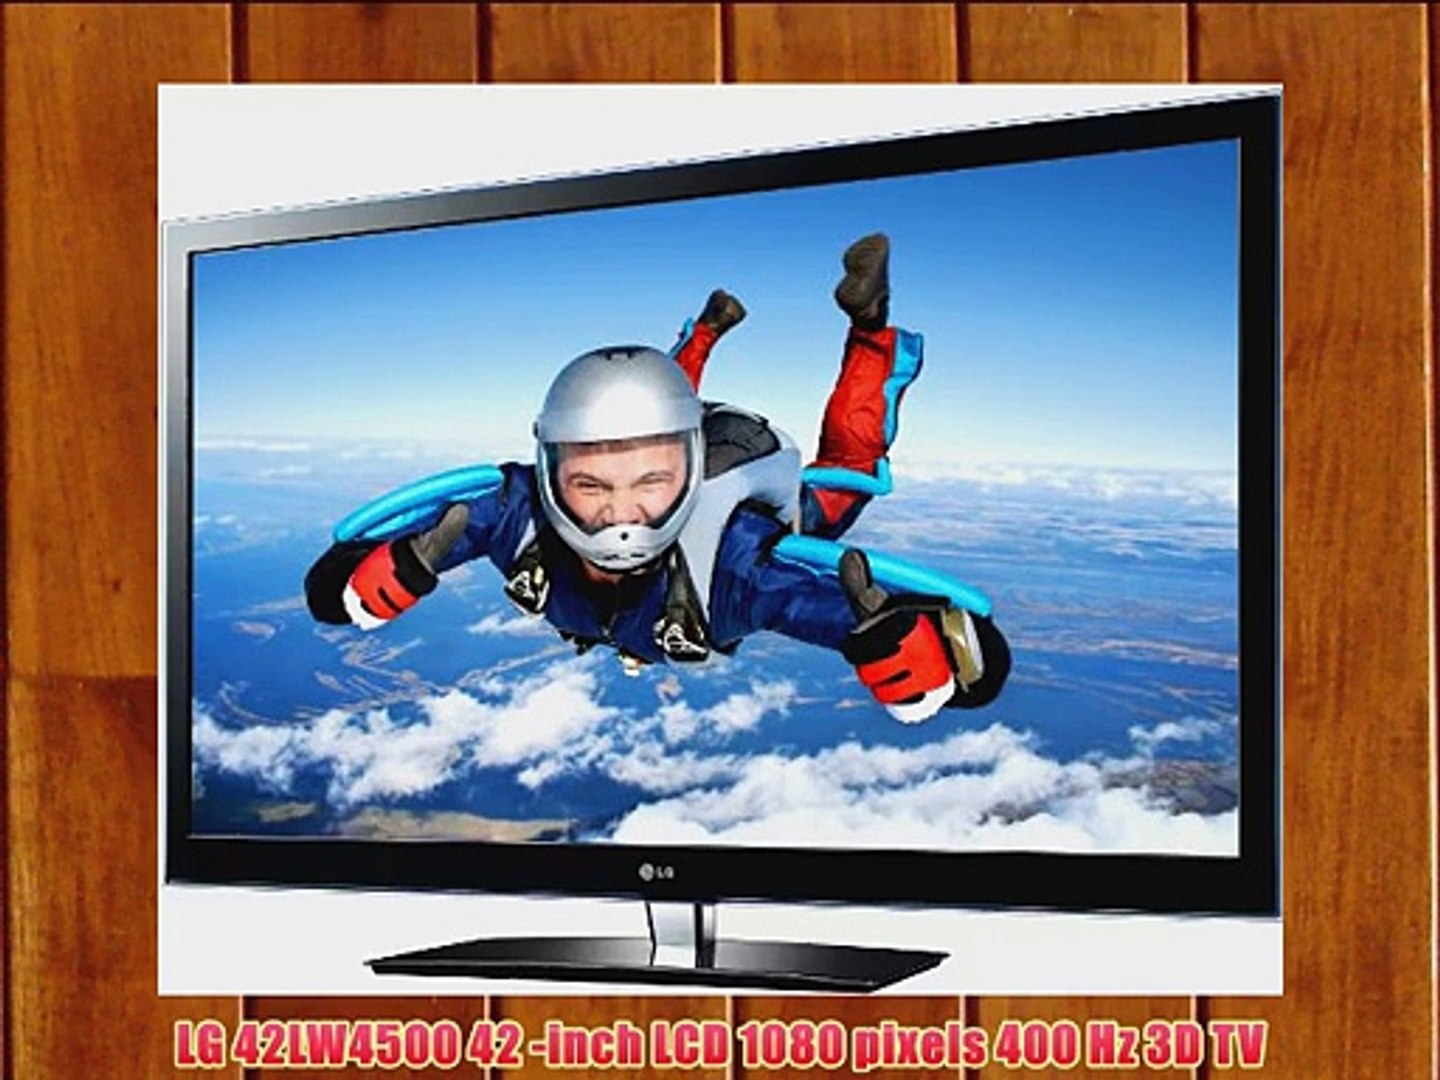 LG 42LW4500 42 -inch LCD 1080 pixels 400 Hz 3D TV - Video Dailymotion